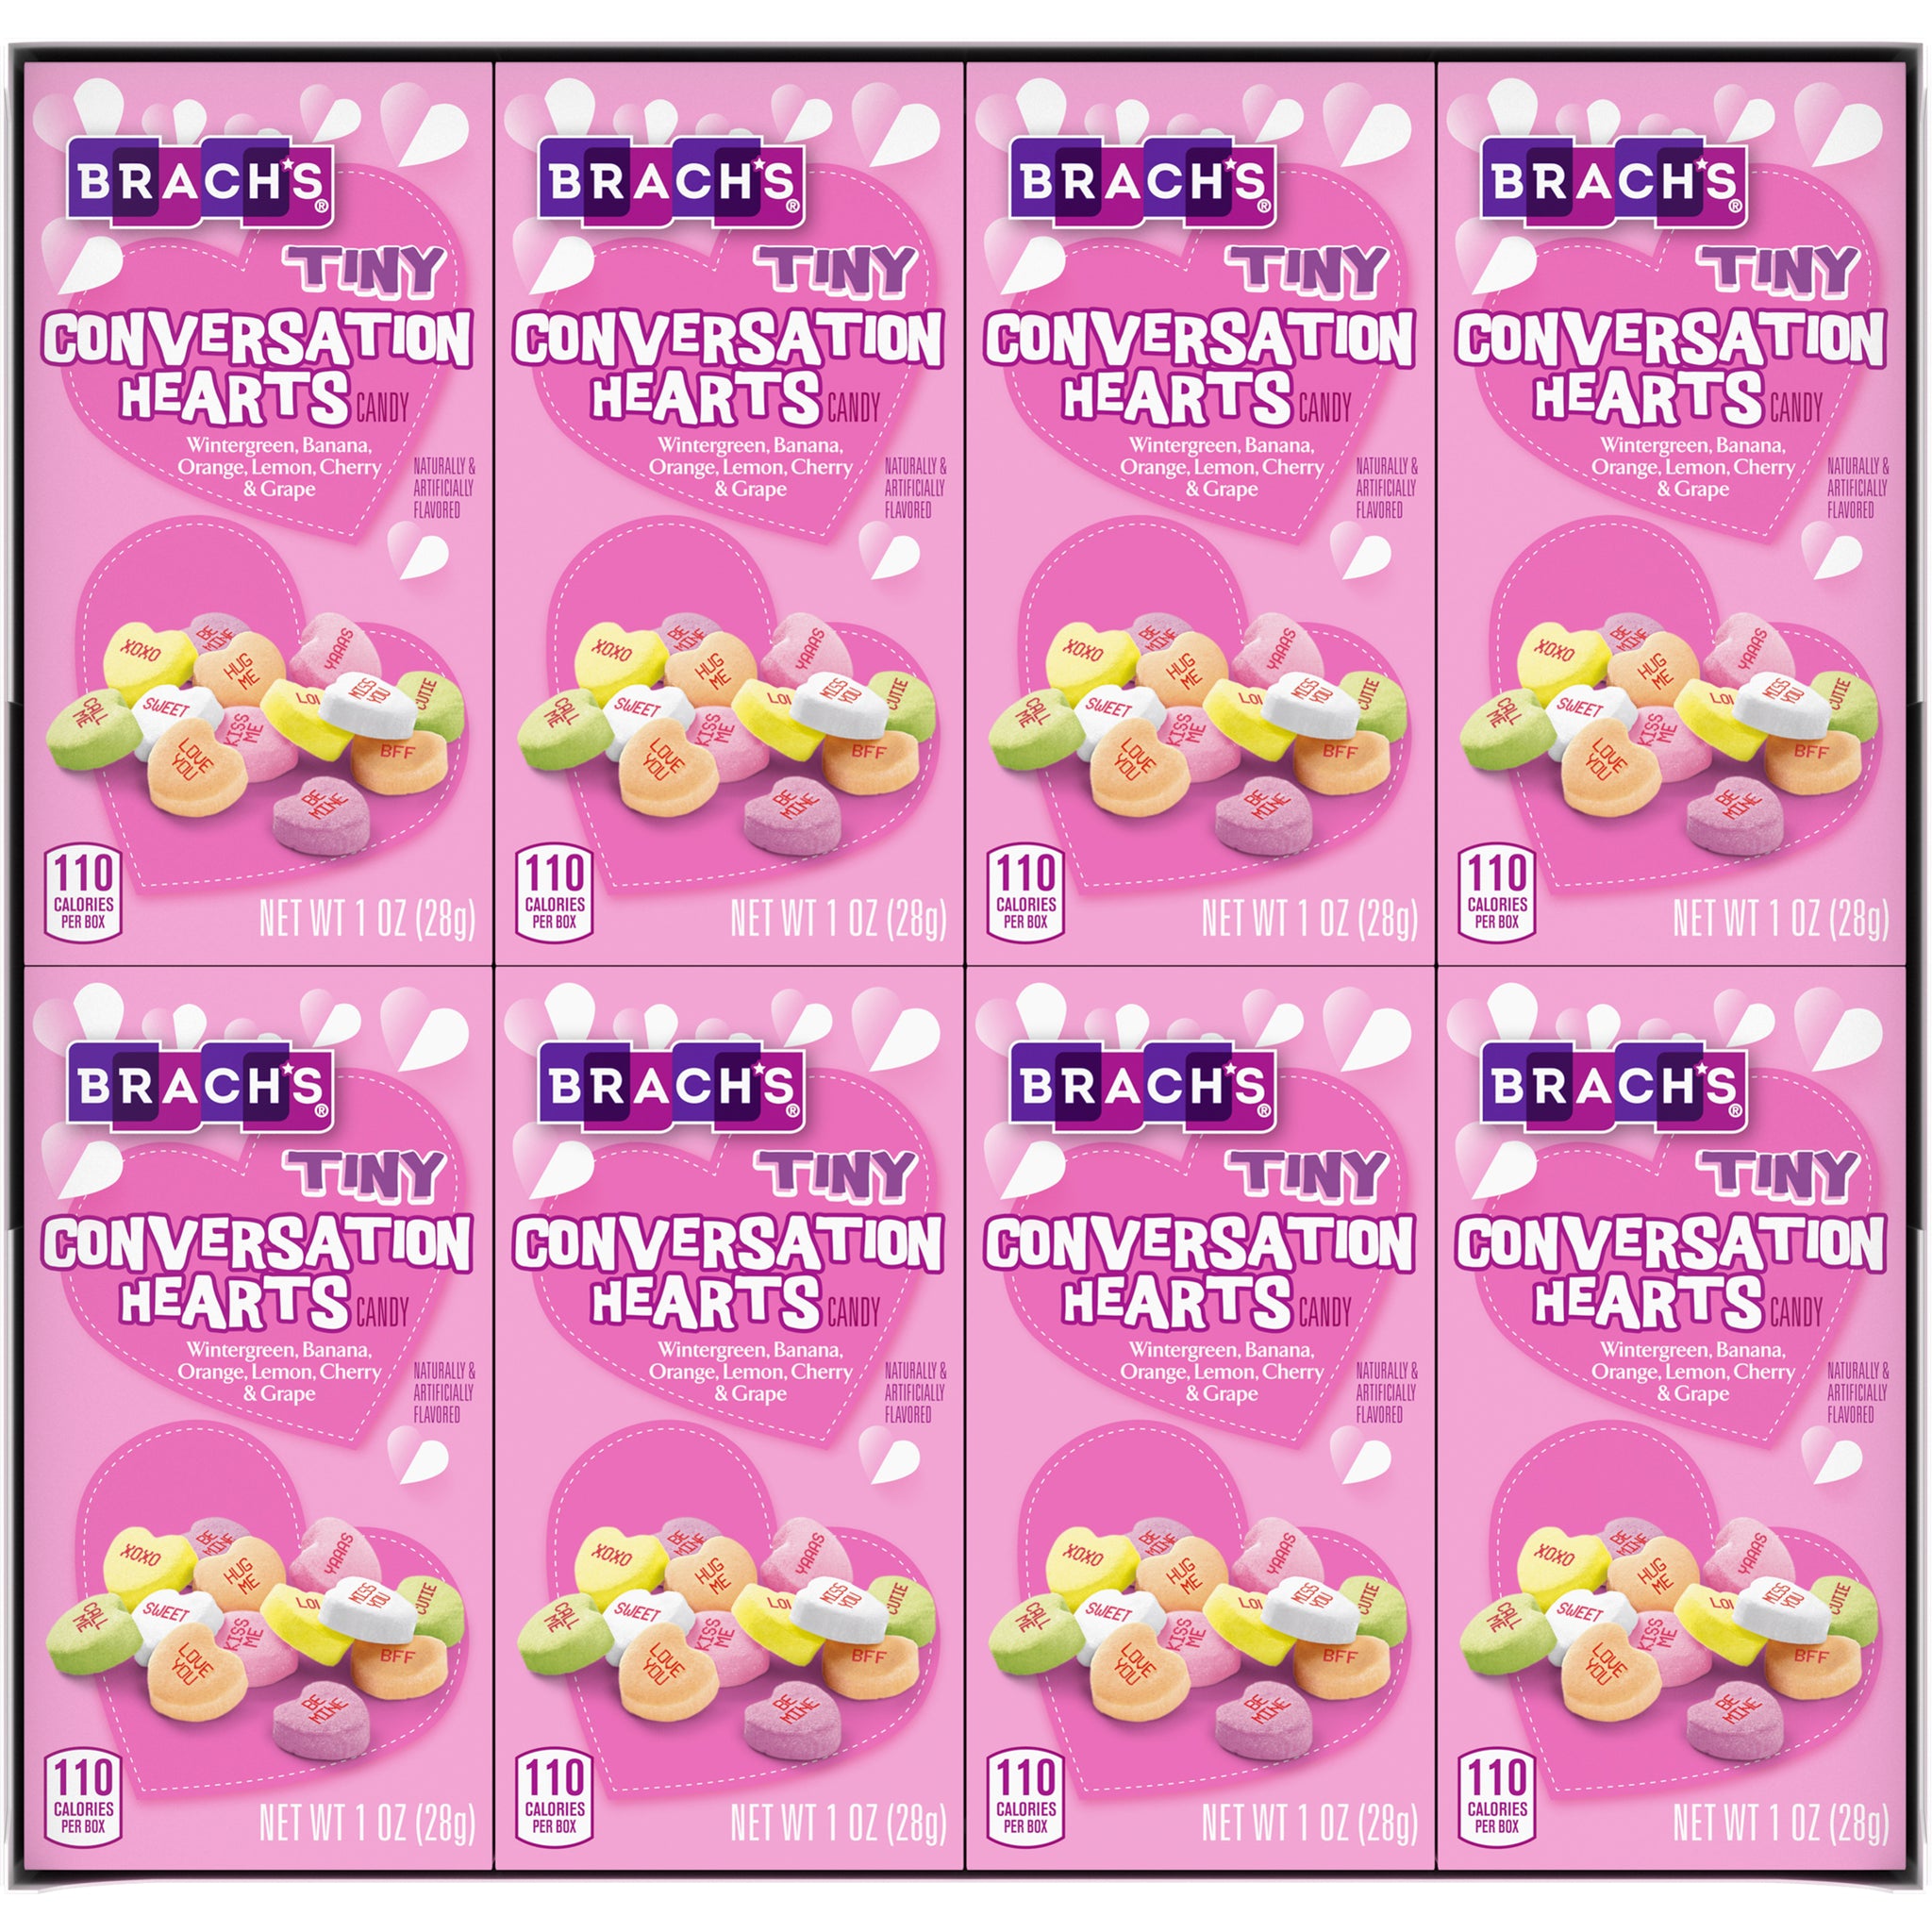 Brach's Candy, Conversation Hearts, Large - 10 oz, Conversation Hearts 